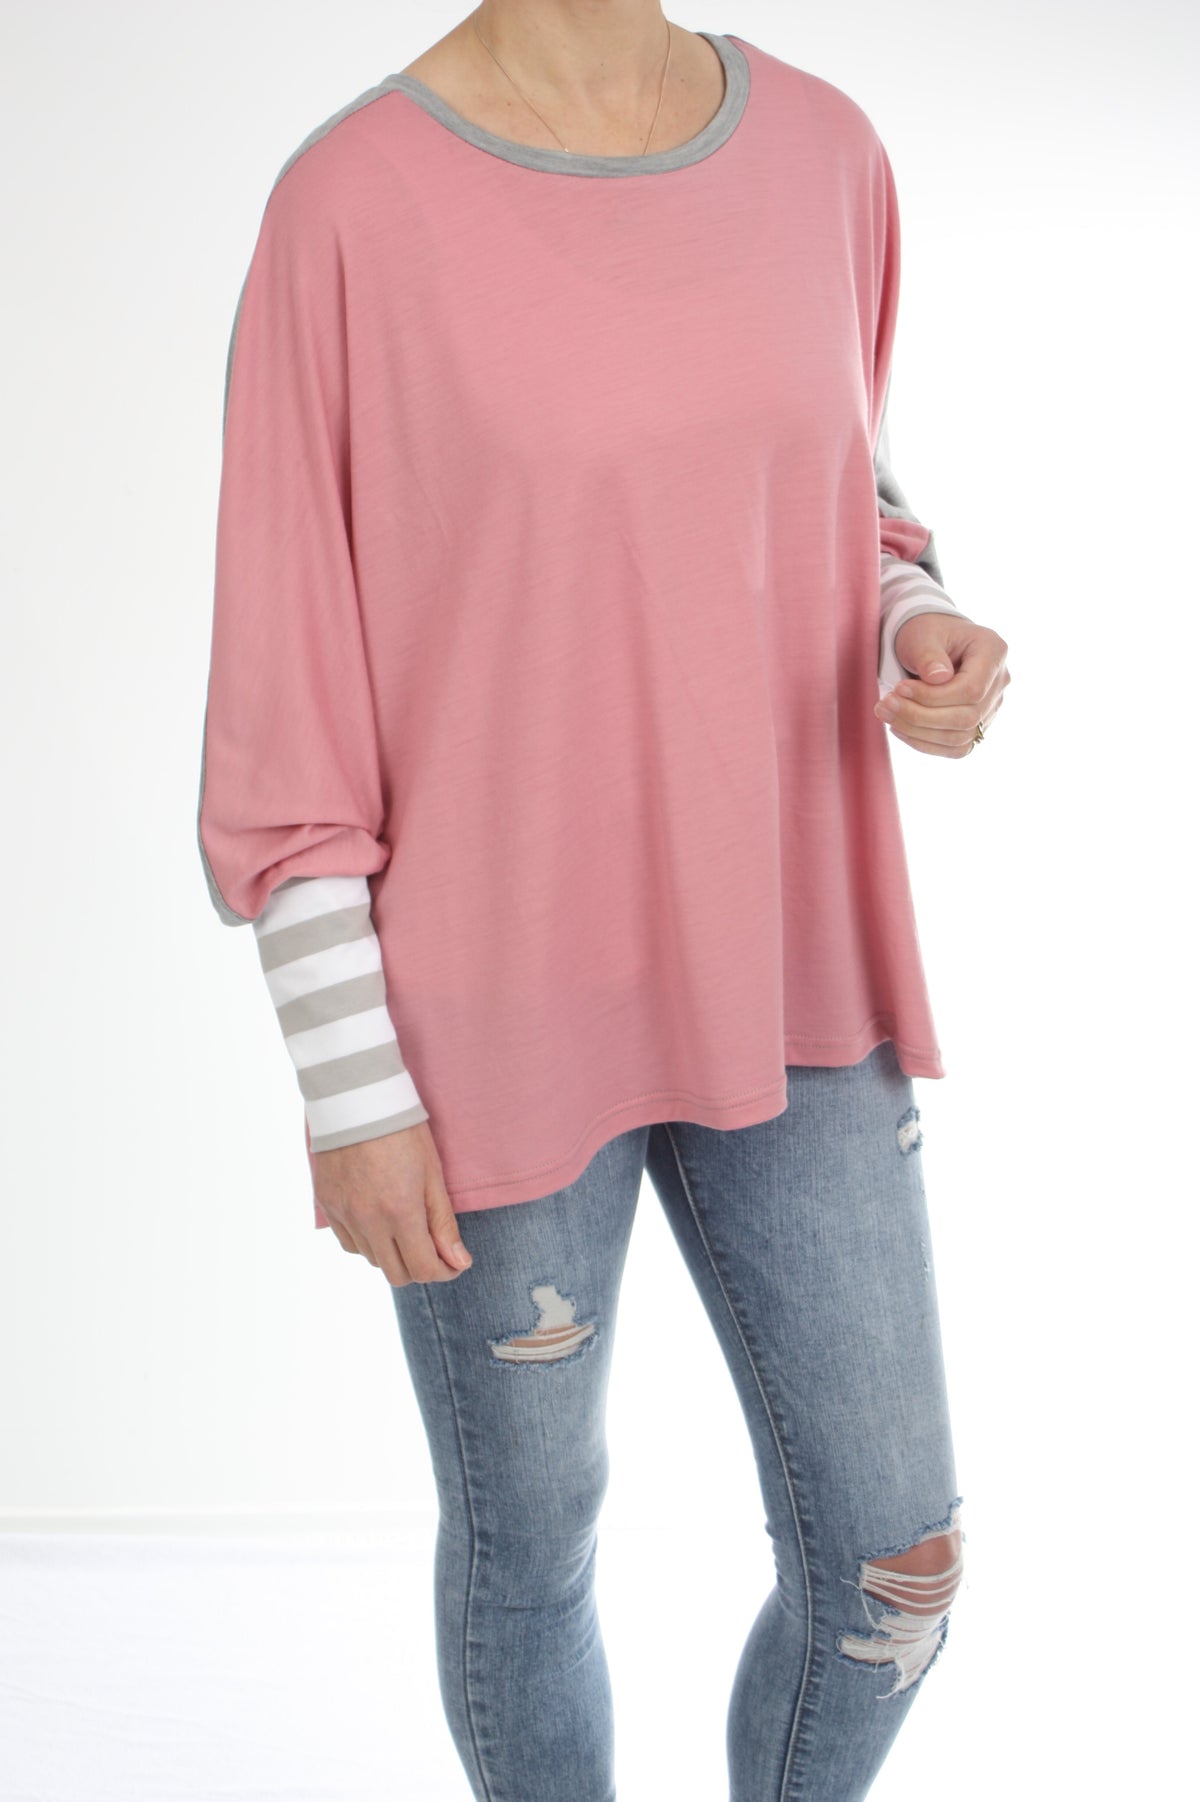 Alexa Top - Merino - Reversible Pink/Grey - Wide Stripe Cuff - Pre-Order